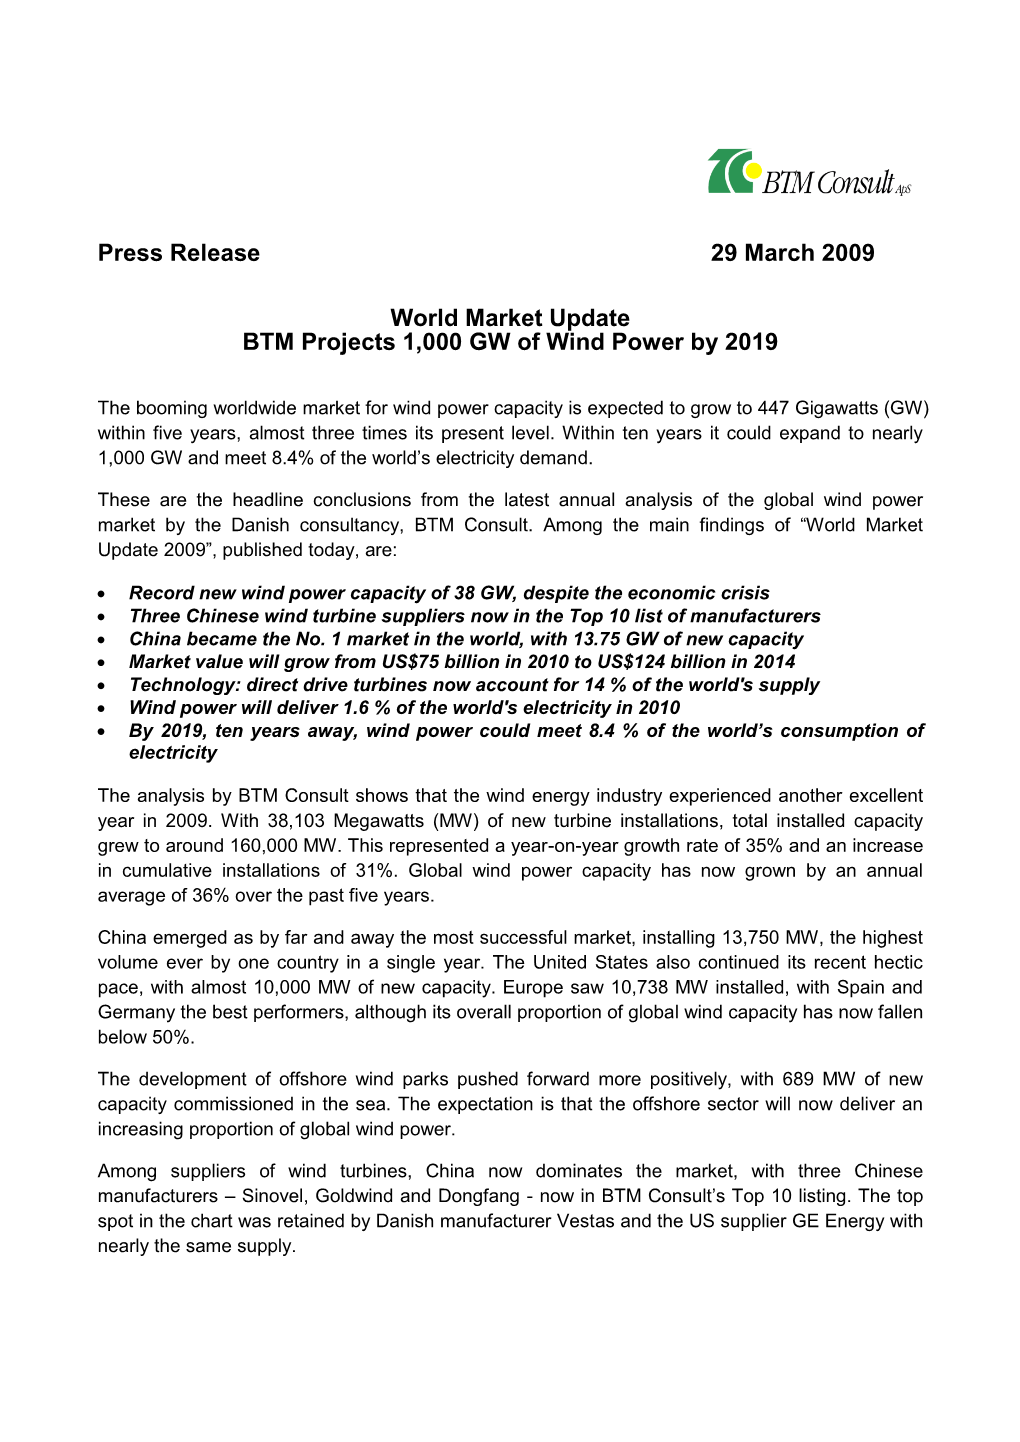 Press Release 29 March 2009 World Market Update BTM Projects 1,000